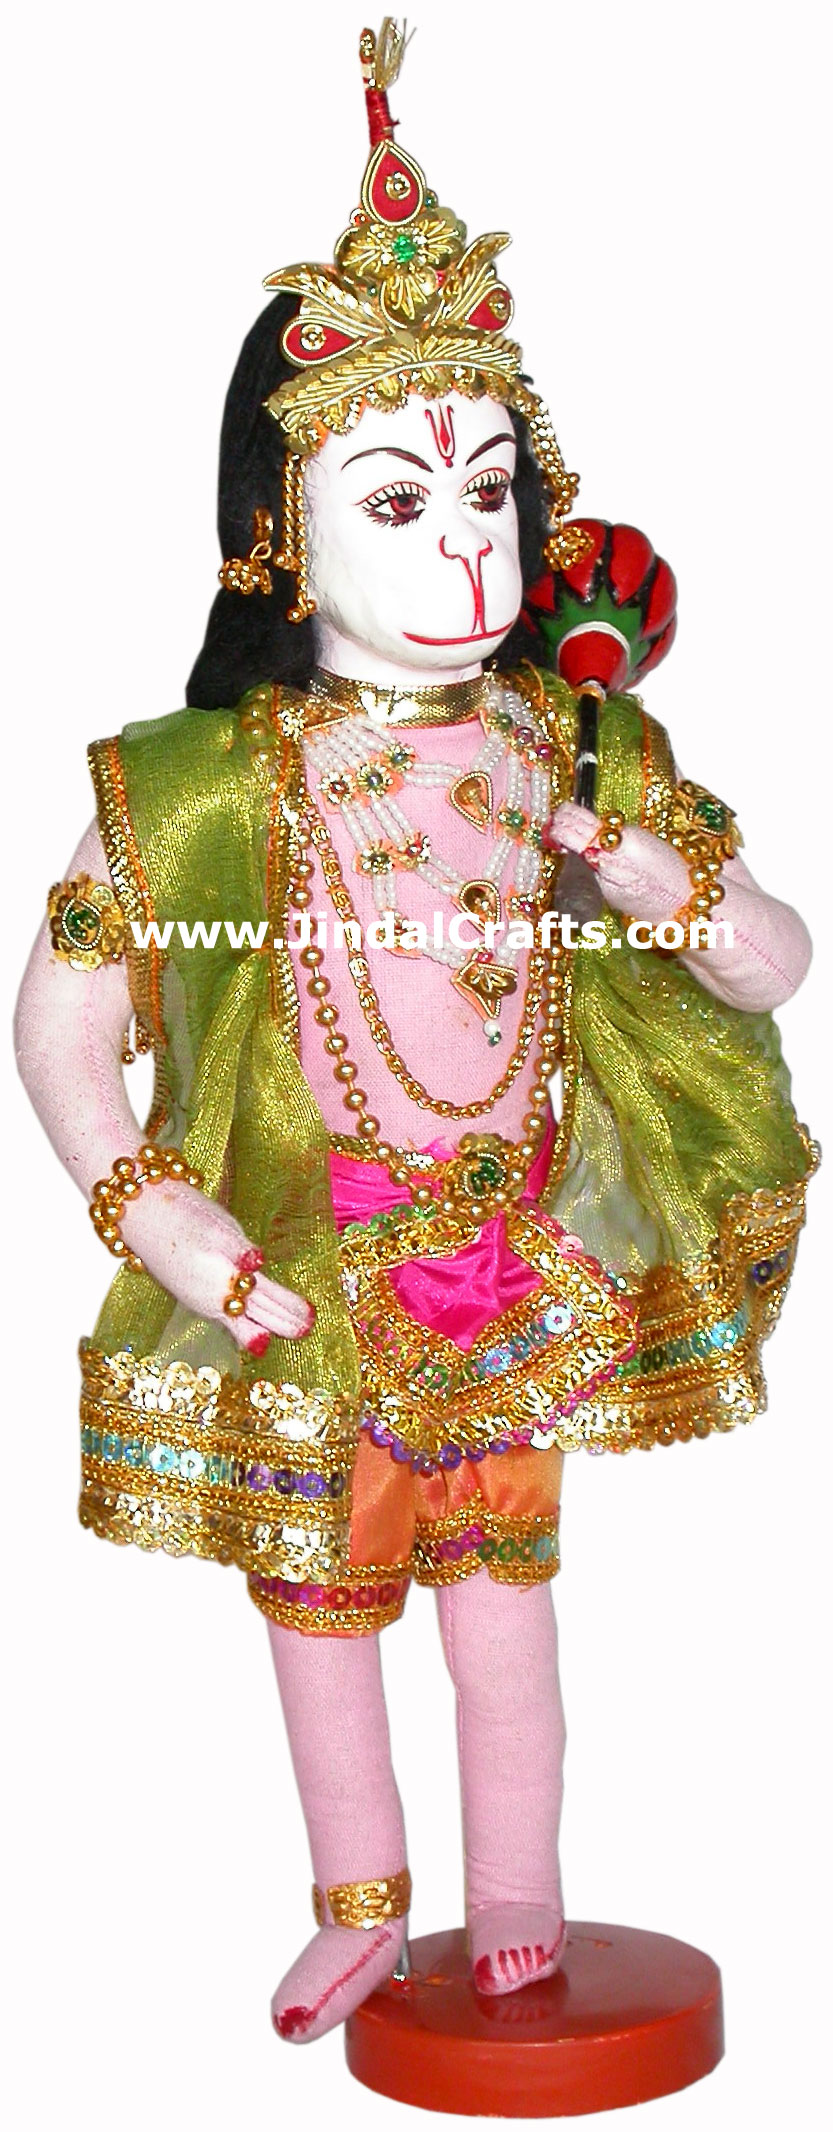 Hanumaan Handmade Traditional Indian Hindu Religious Collectible Costume Doll